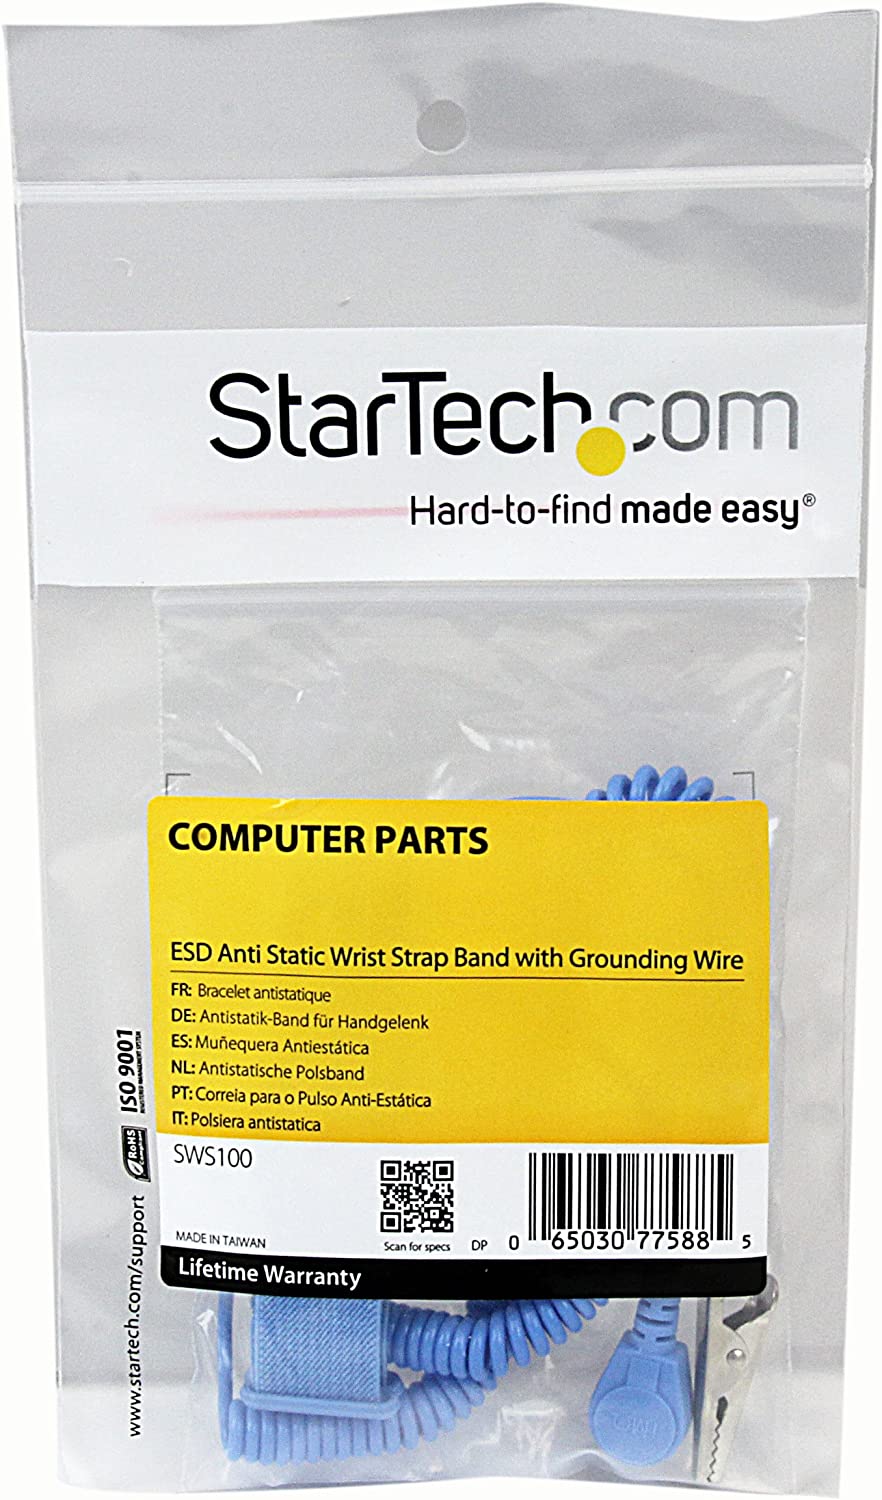 StarTech.com ESD Anti Static Wrist Strap Band with Grounding Wire - AntiStatic Wrist Strap - Anti-static wrist band (SWS100),Blue